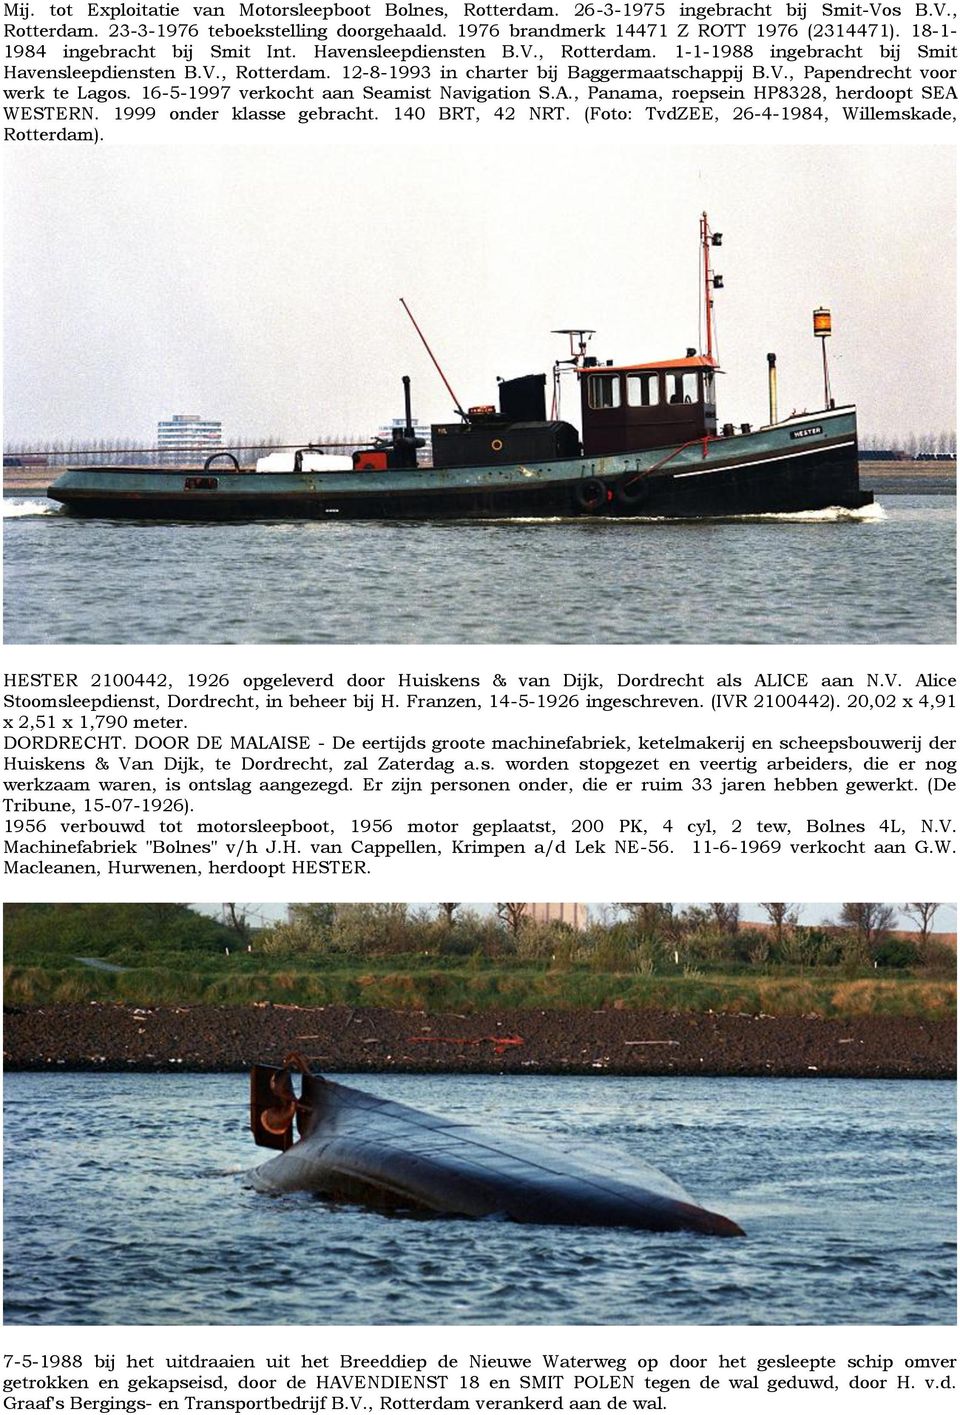 16-5-1997 verkocht aan Seamist Navigation S.A., Panama, roepsein HP8328, herdoopt SEA WESTERN. 1999 onder klasse gebracht. 140 BRT, 42 NRT. (Foto: TvdZEE, 26-4-1984, Willemskade, Rotterdam).